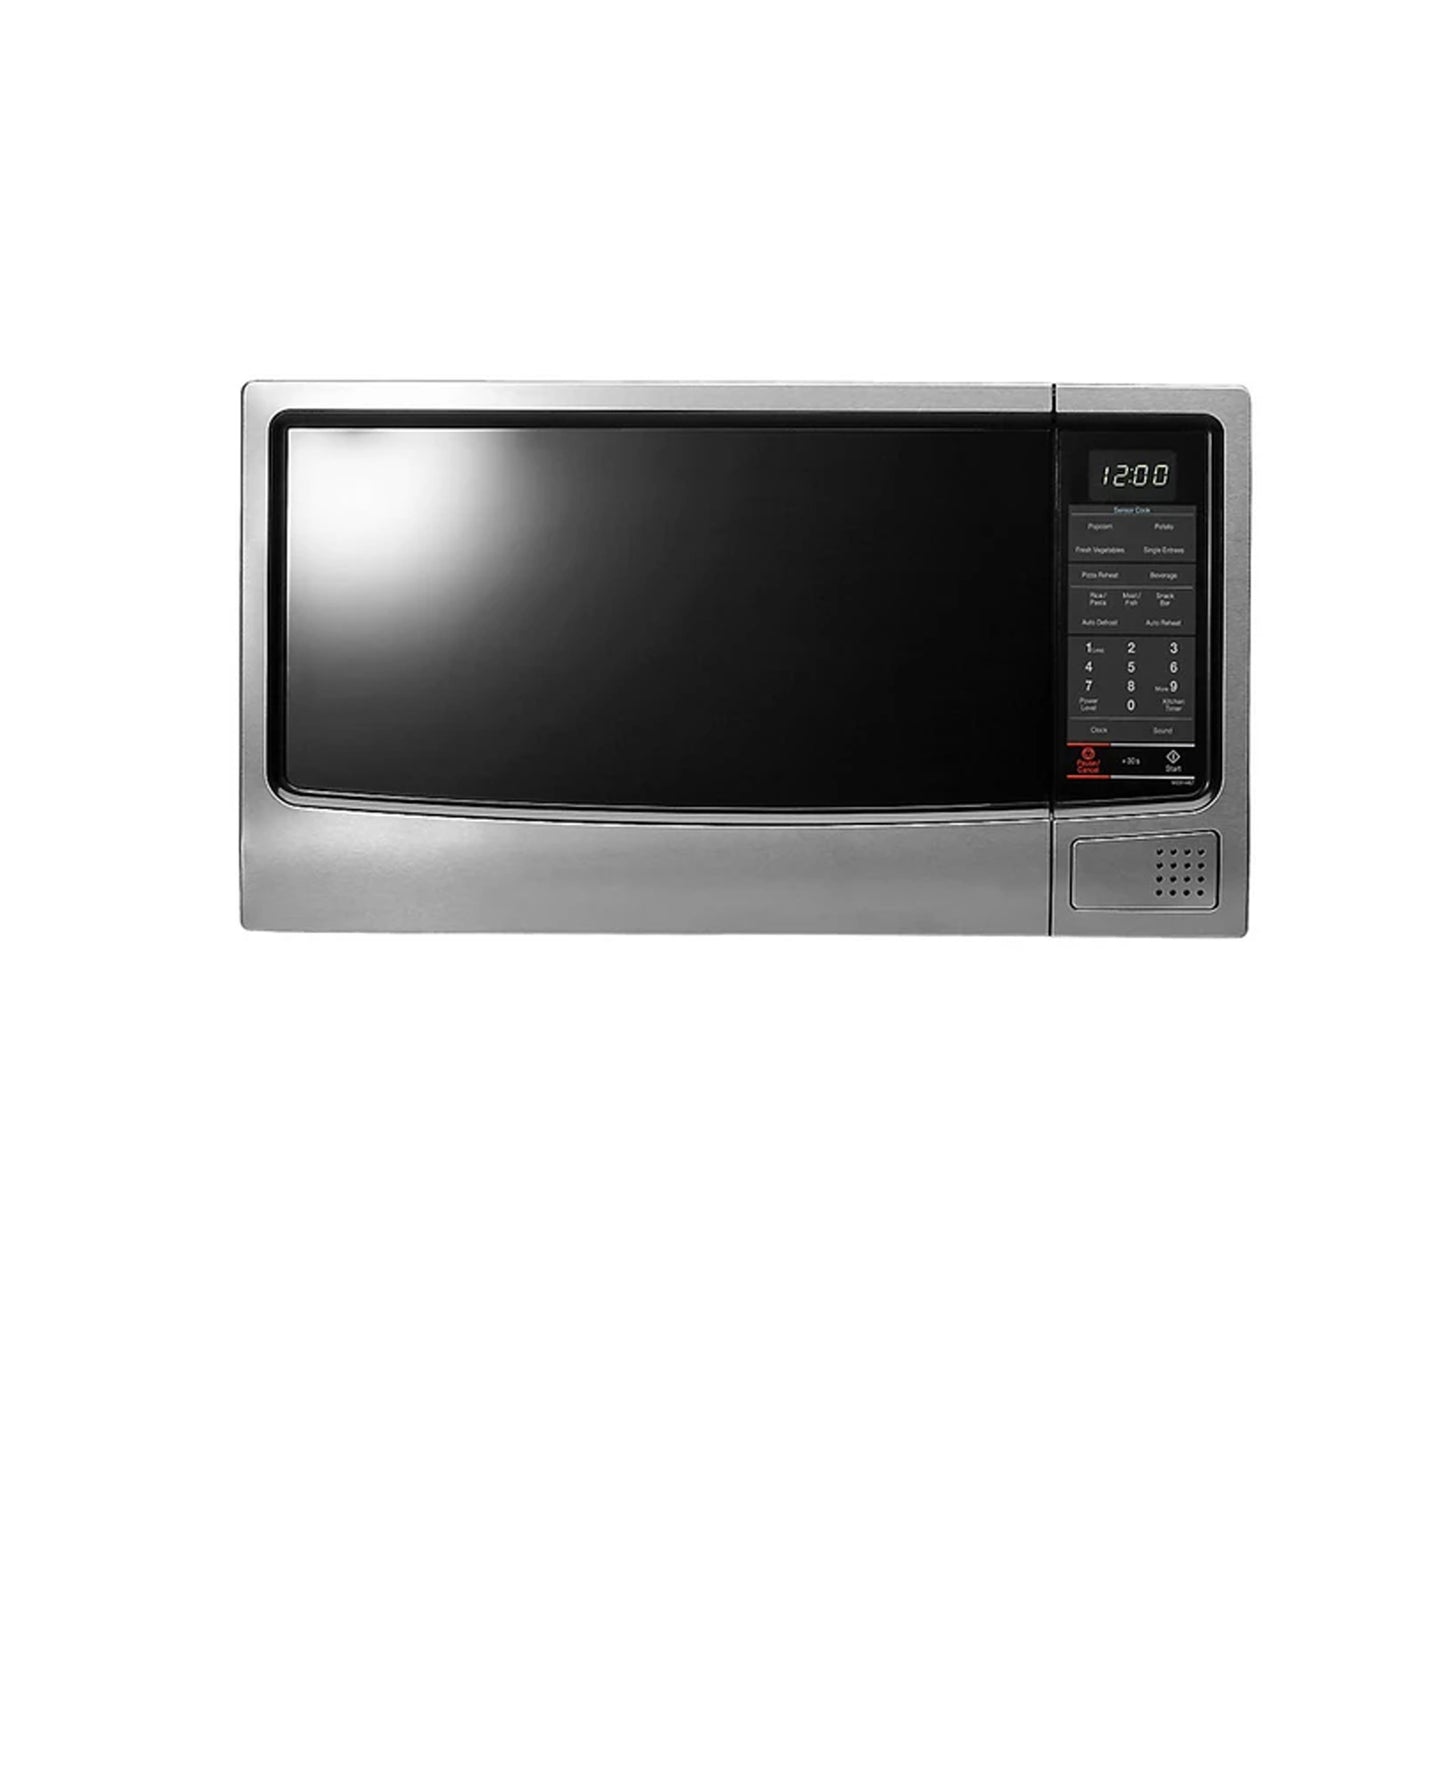 Samsung 40L Solo Microwave Oven - Metallic